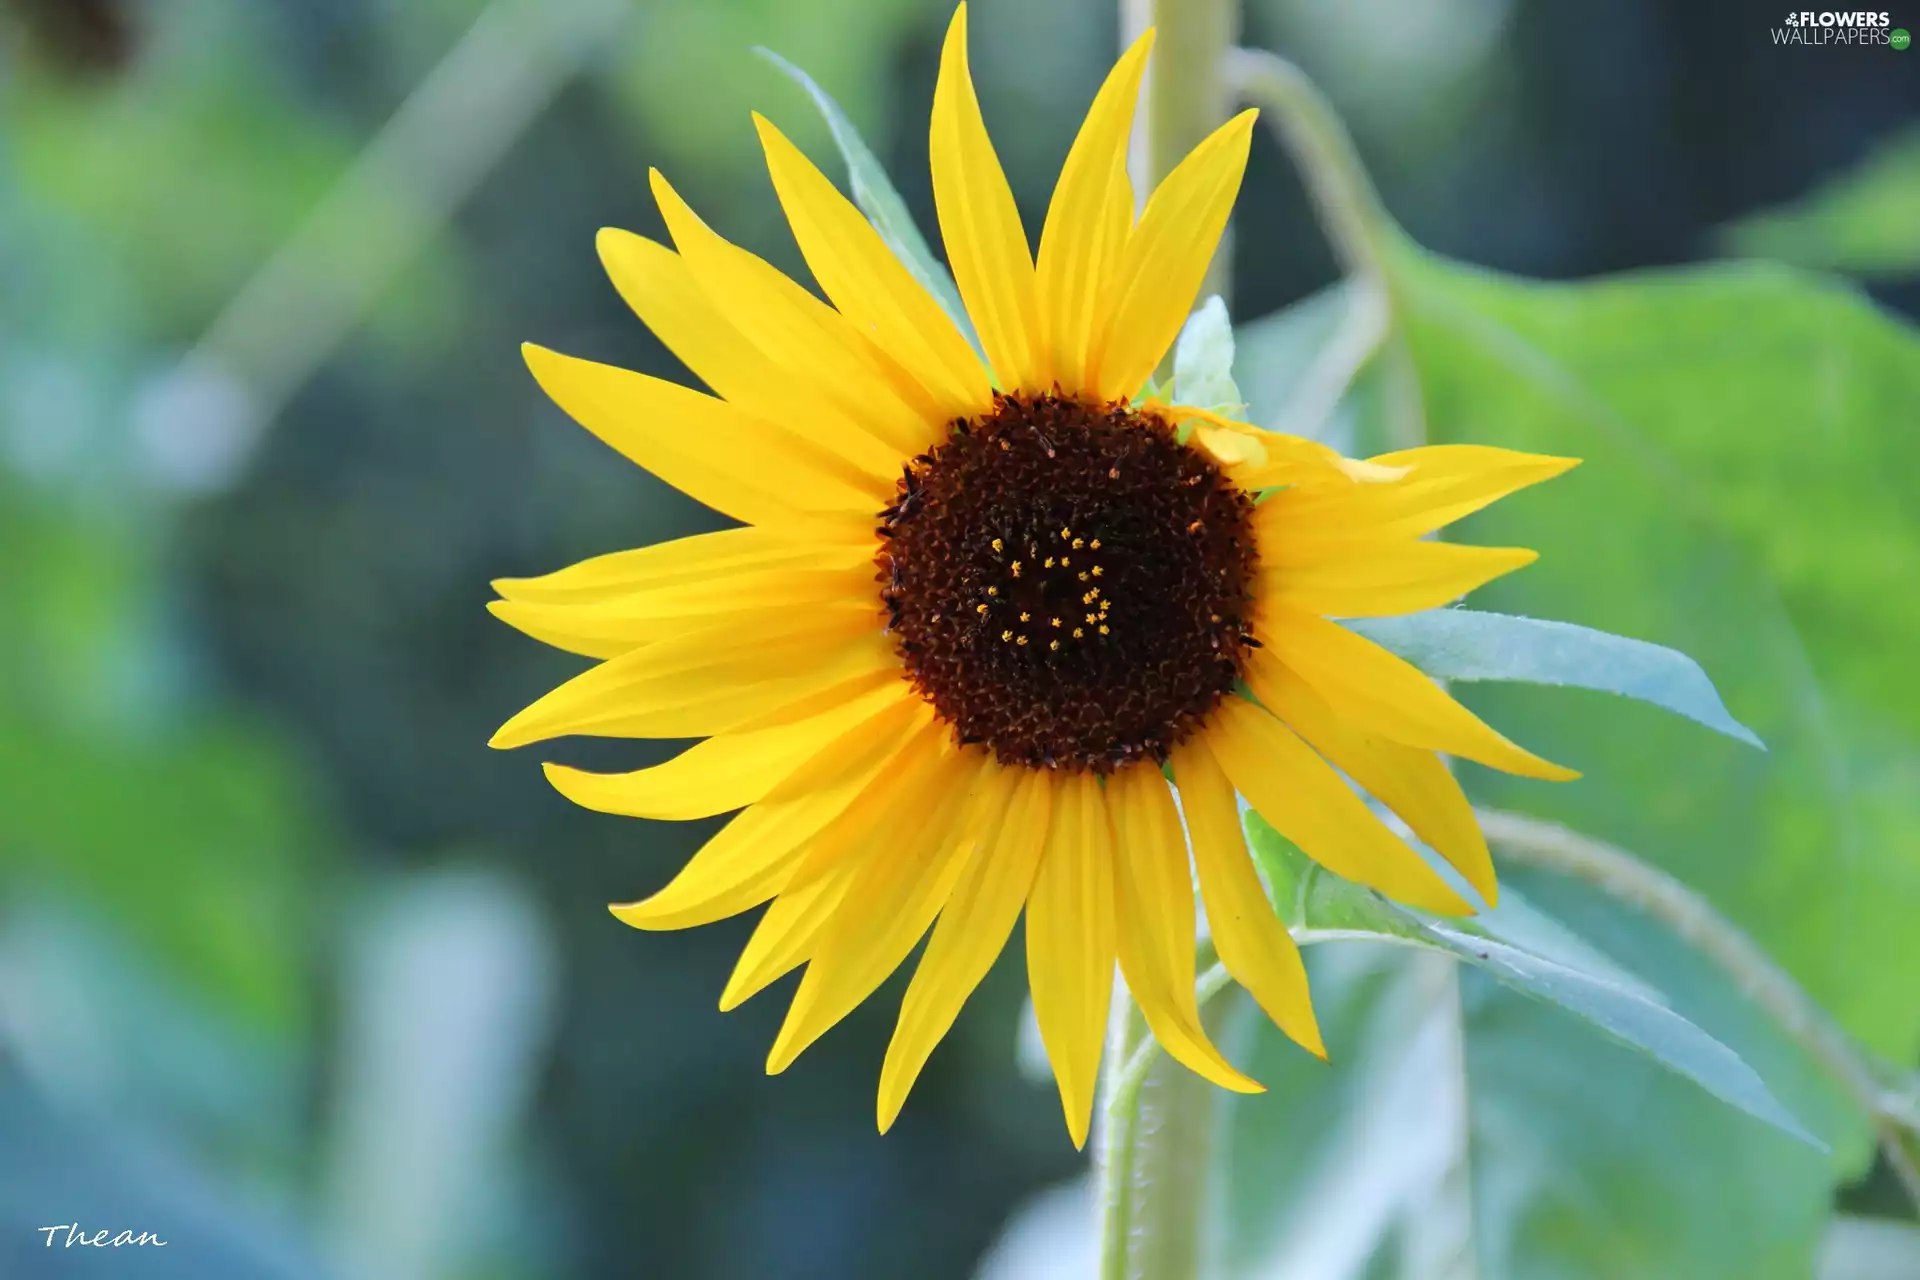 Sunflower, decorated